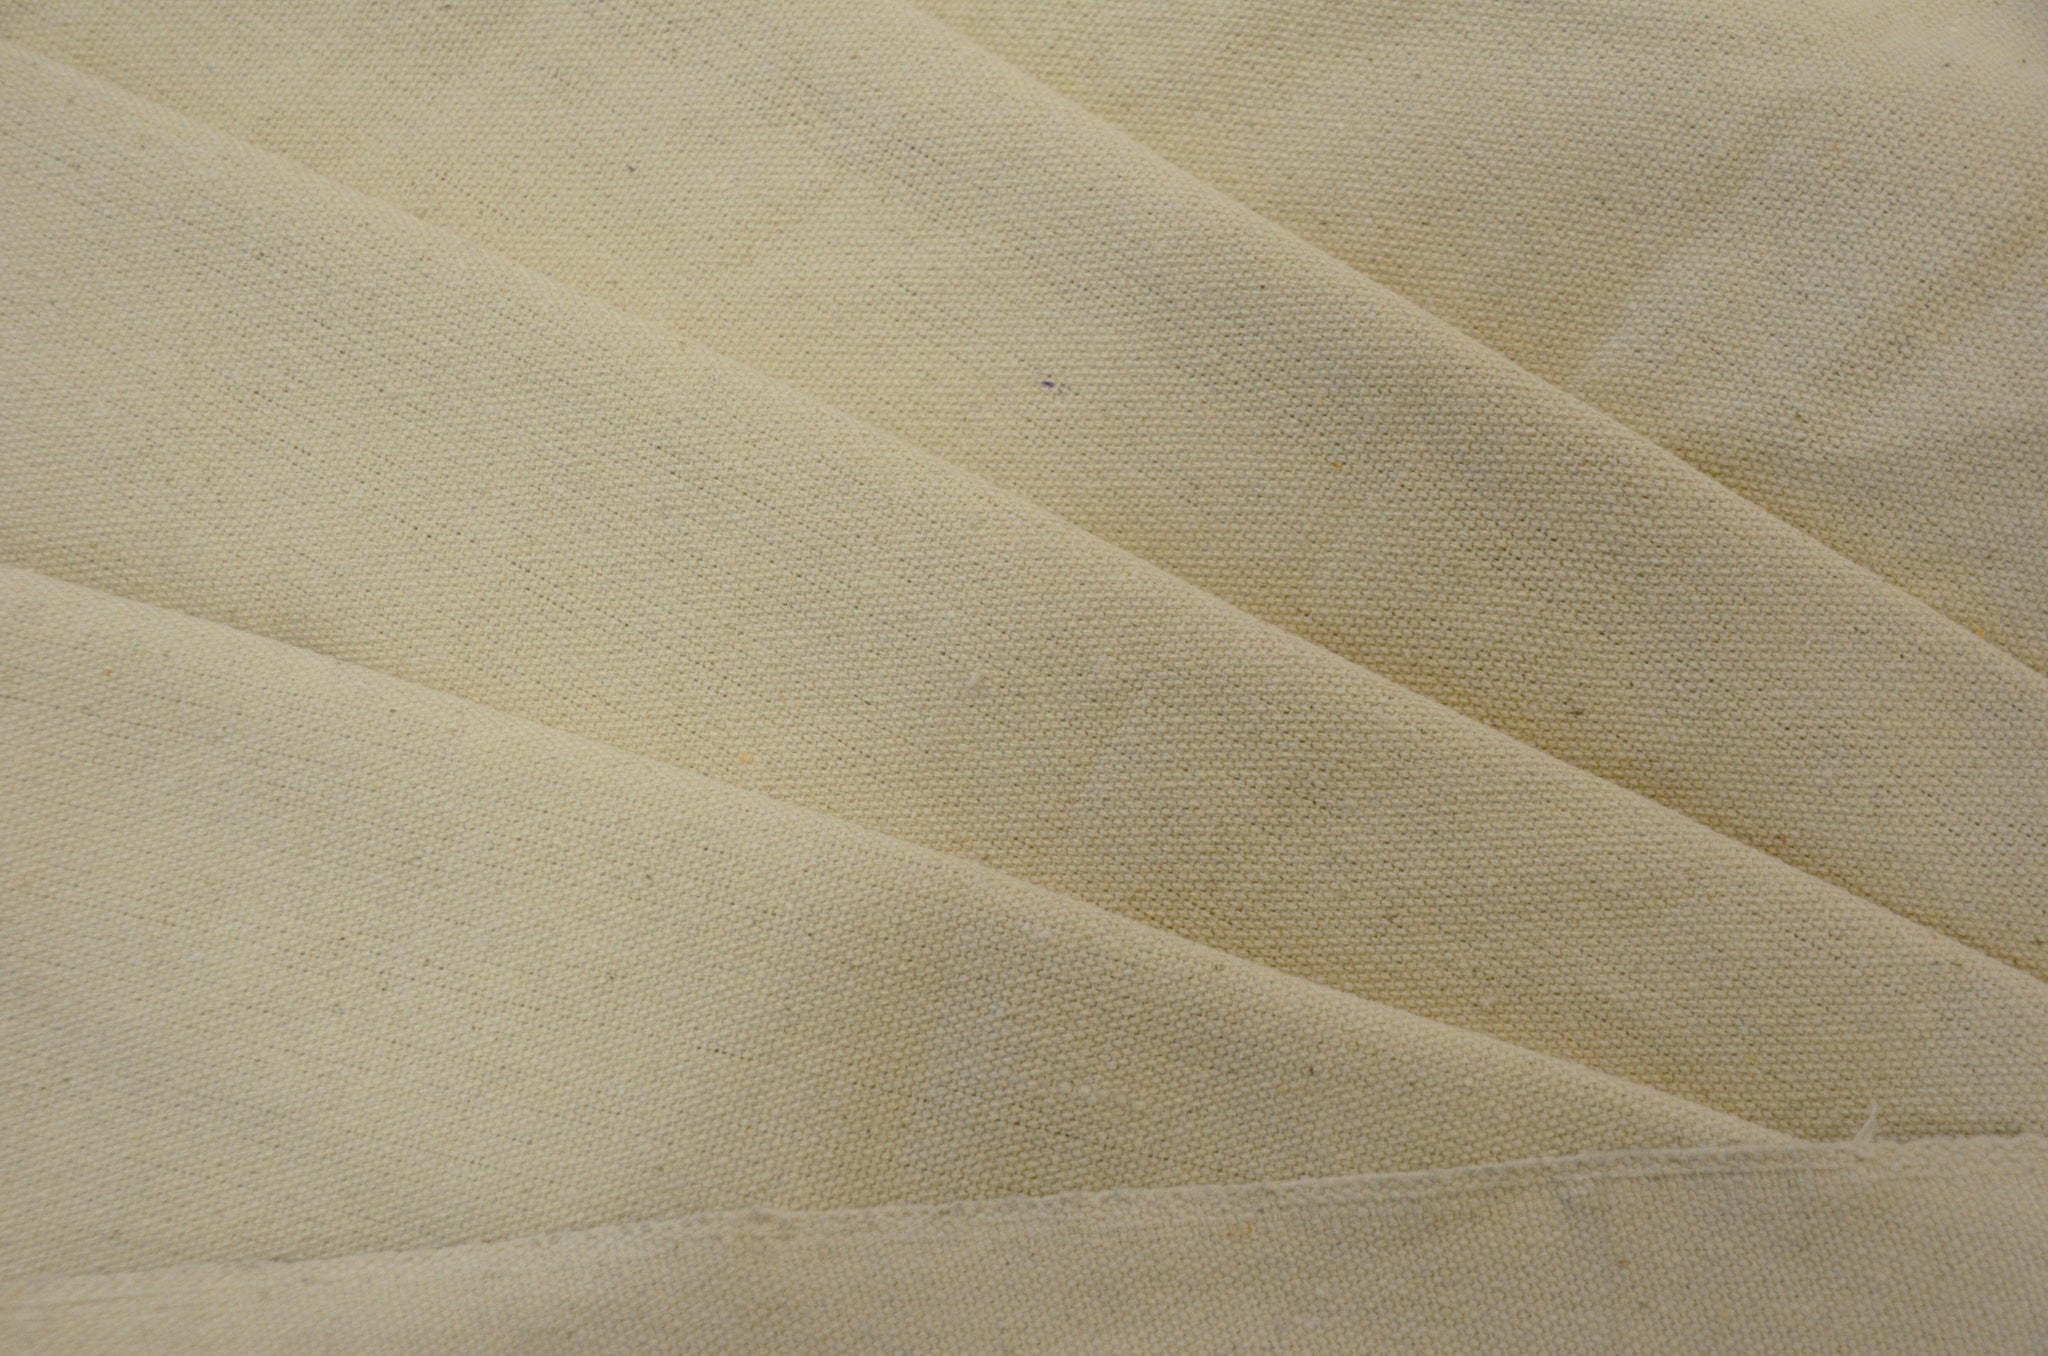 10 oz Cotton Duck Canvas Fabric